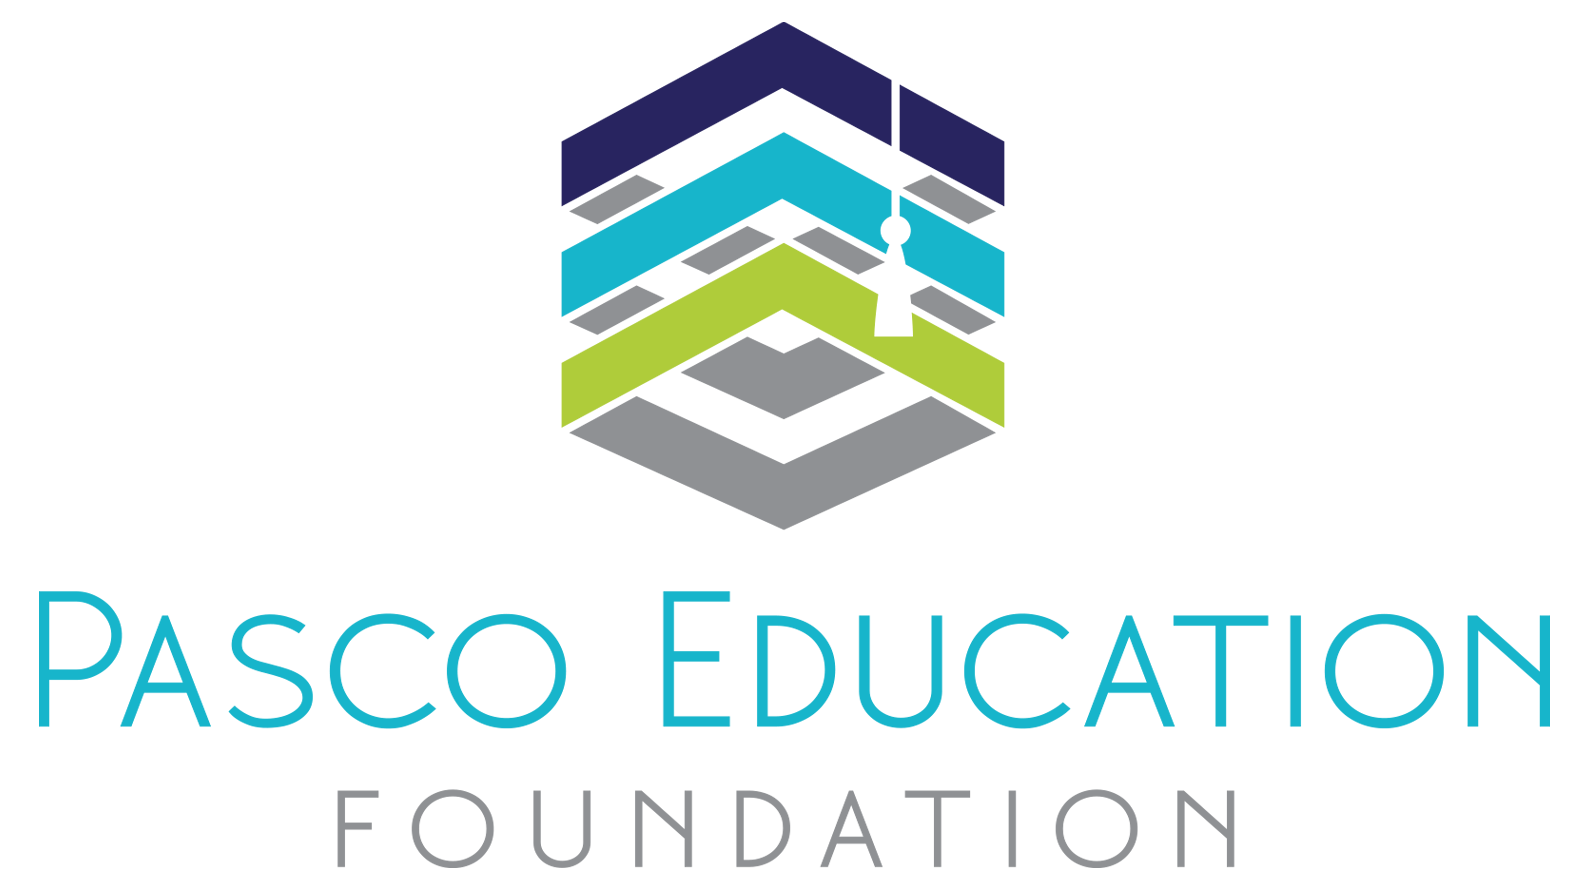 Pasco Education Foundation